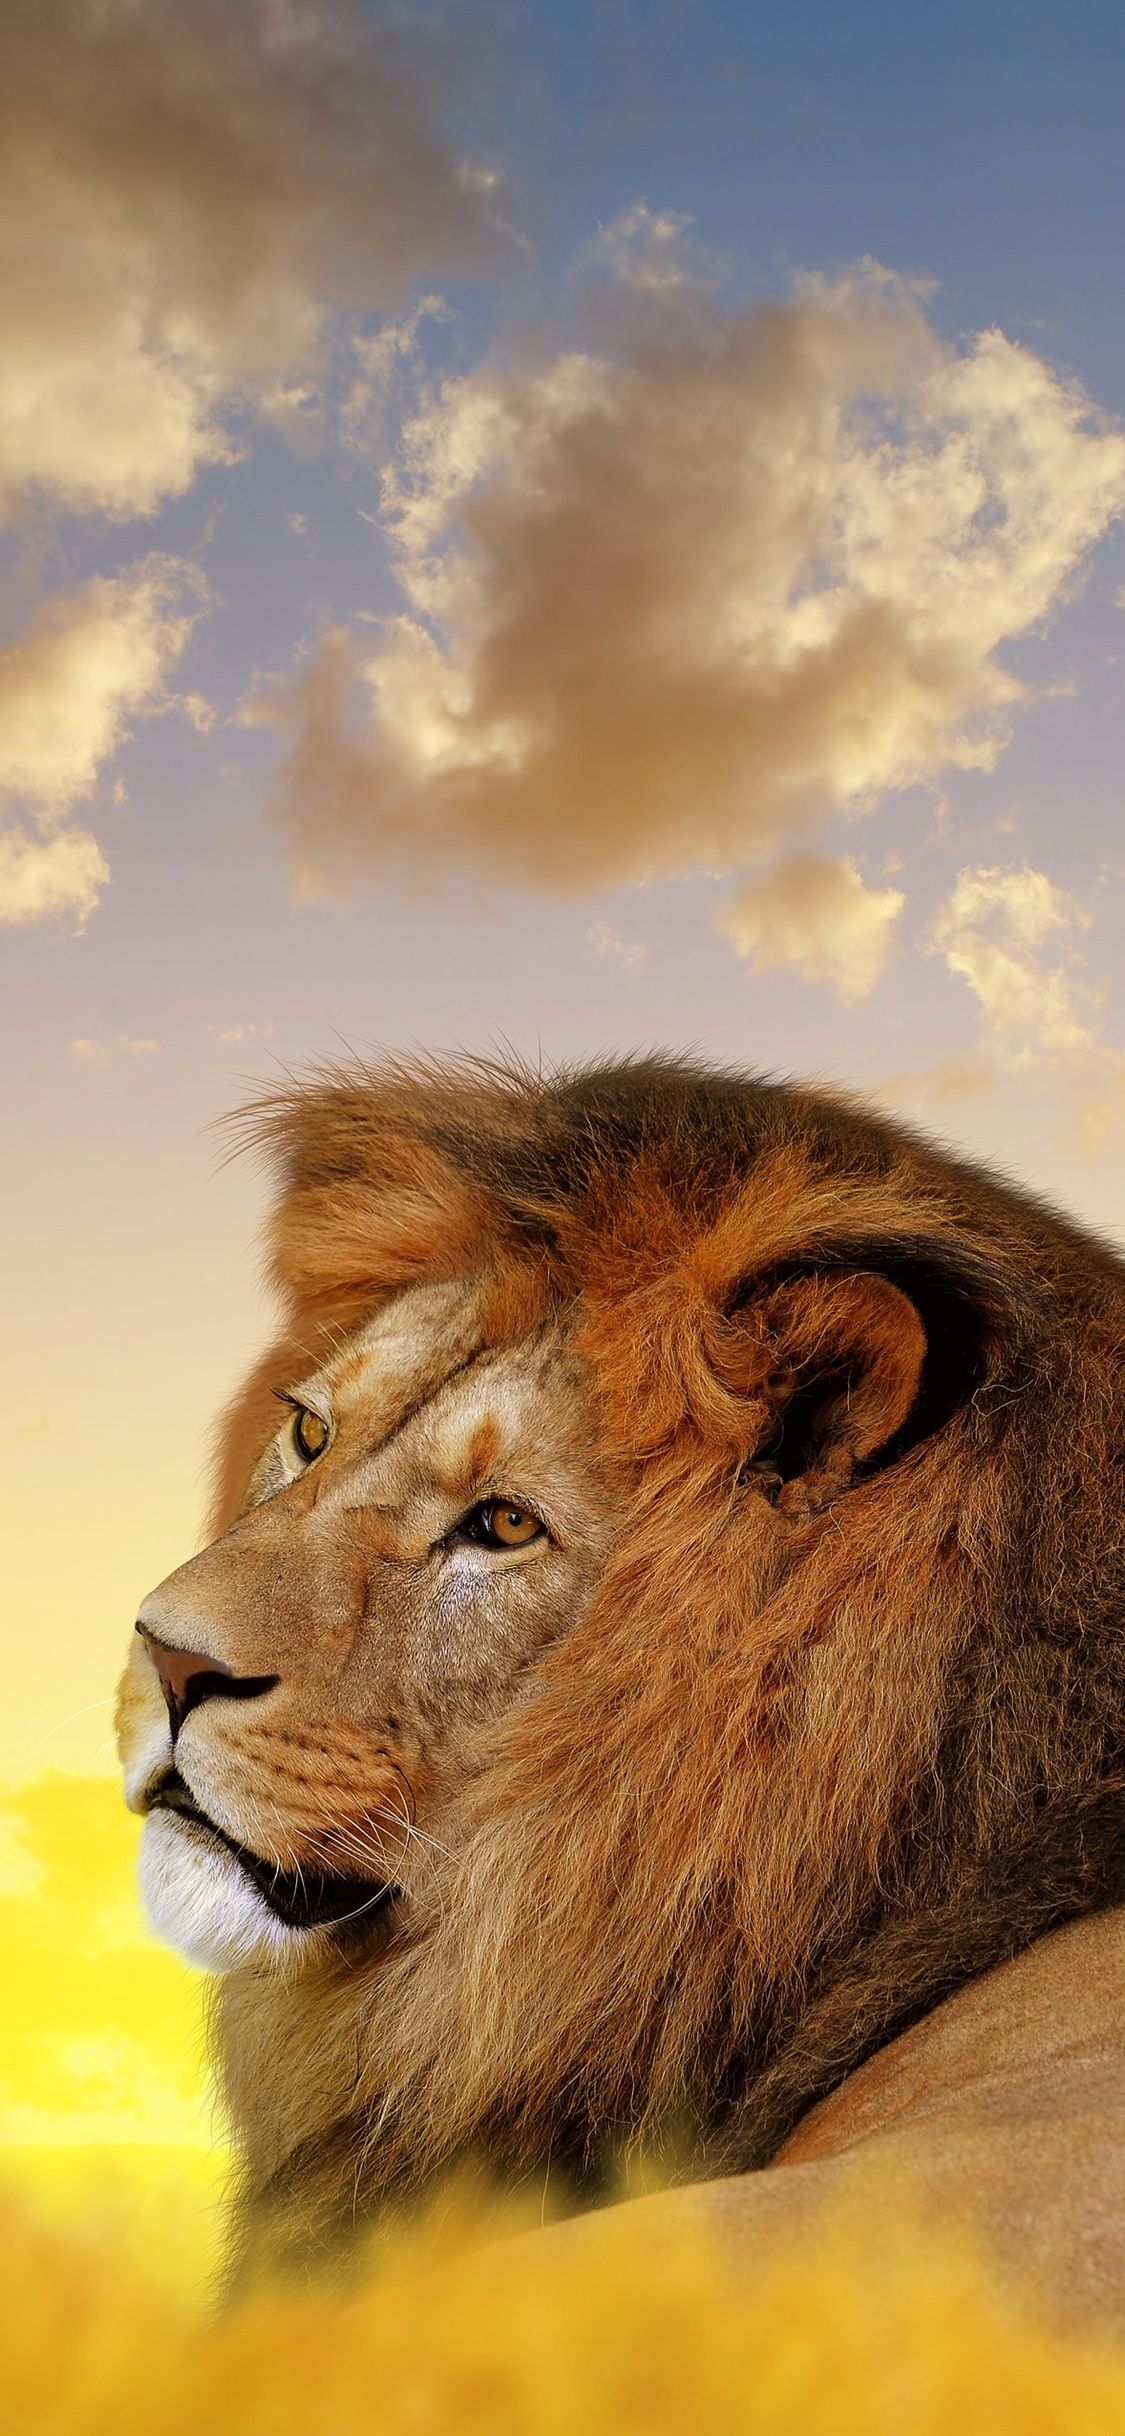 Lion iPhone X Wallpaper